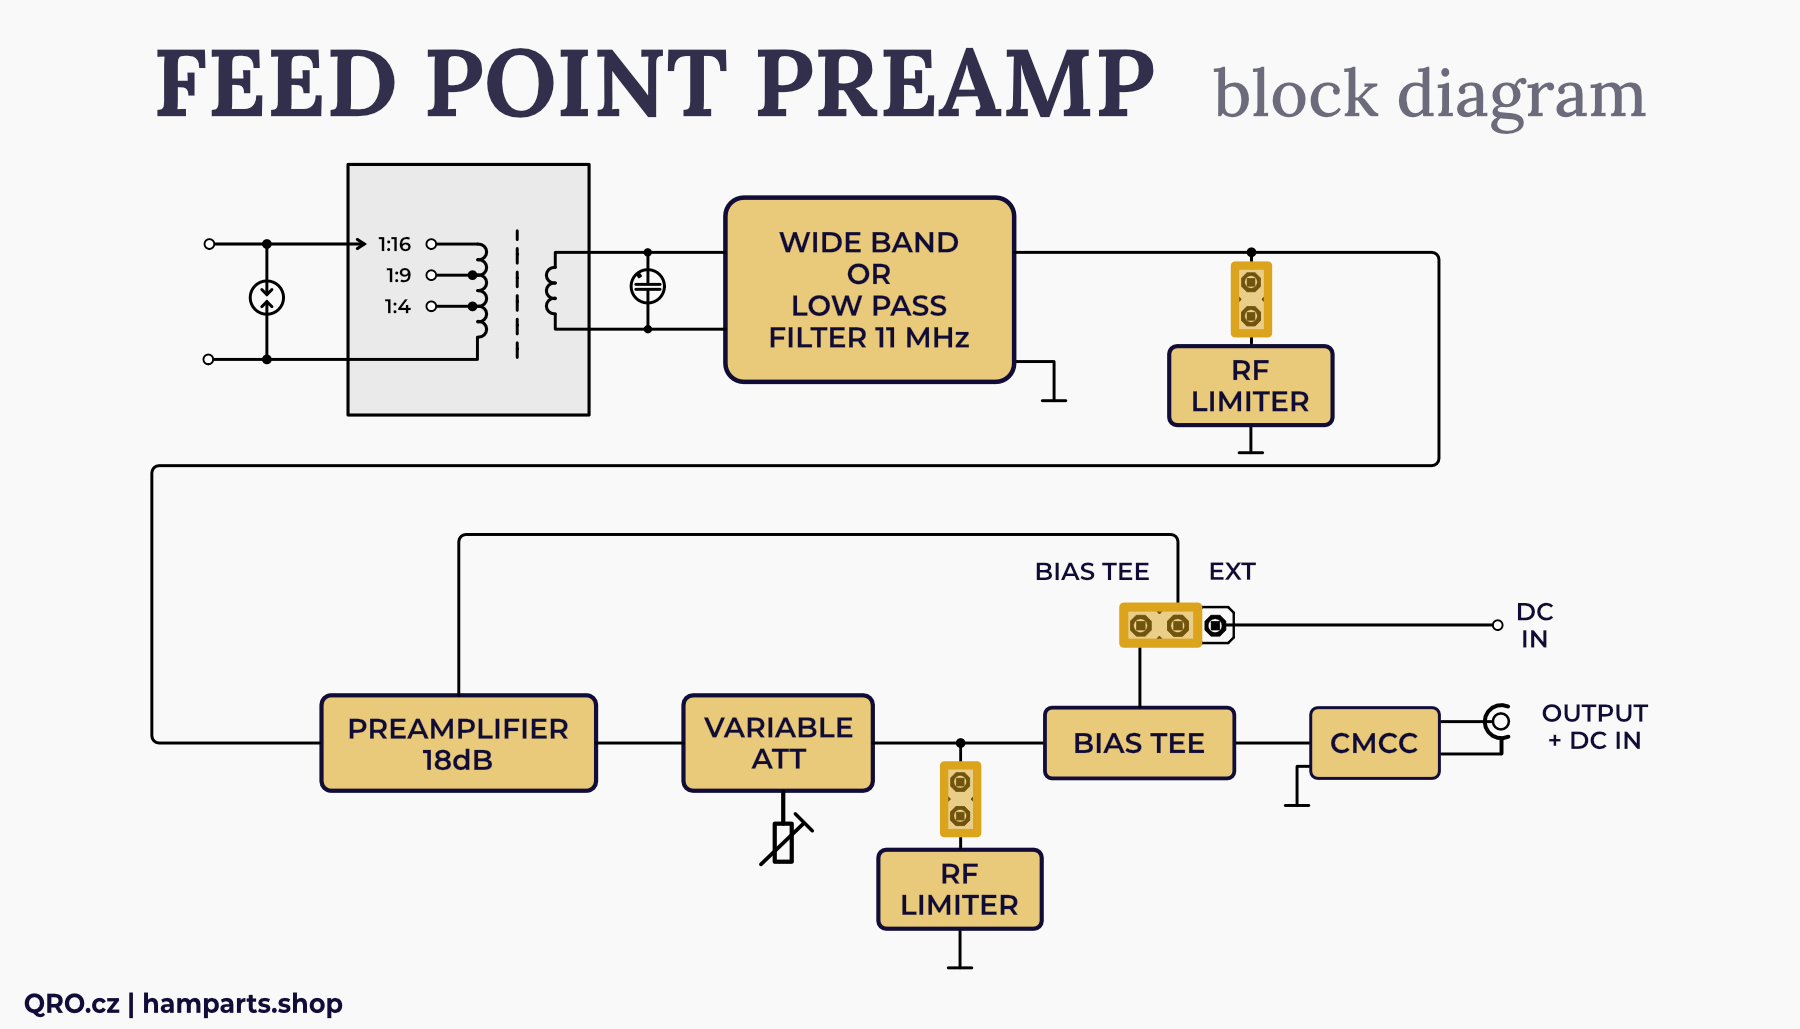 rx feed point feeder box block diagram by qro.cz hamparts.shop